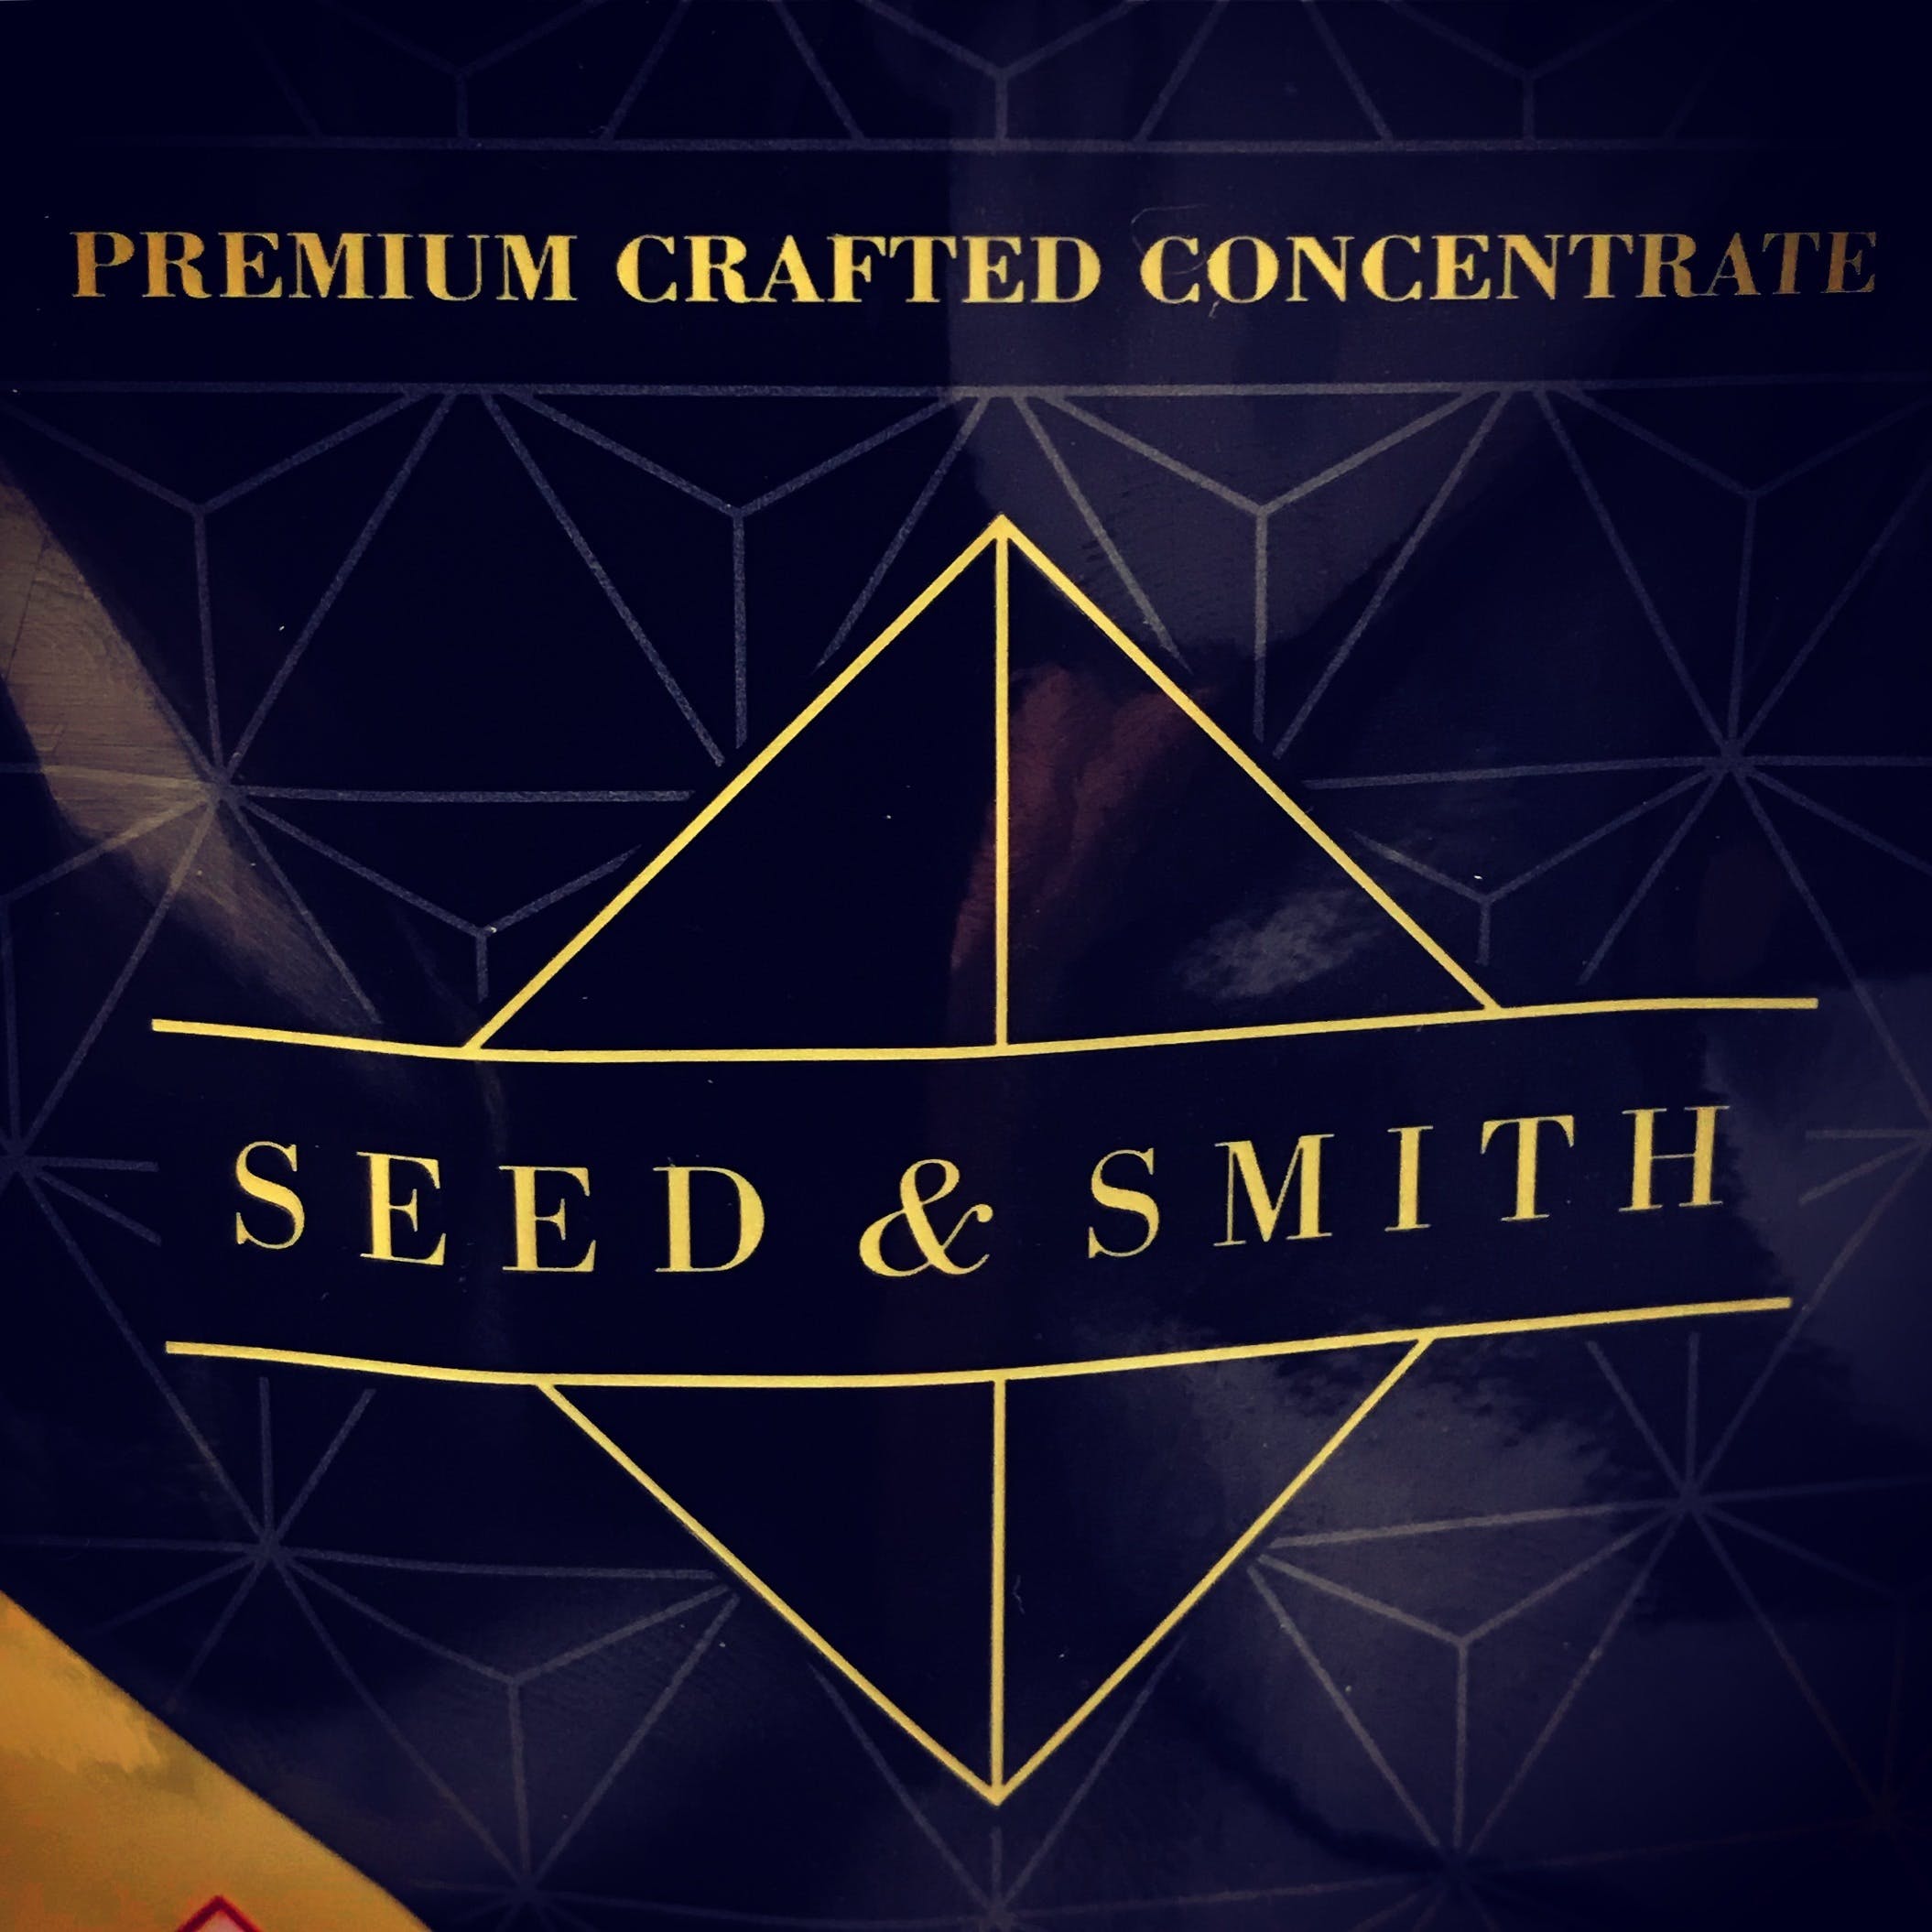 500mg Cartridge (Seed & Smith)